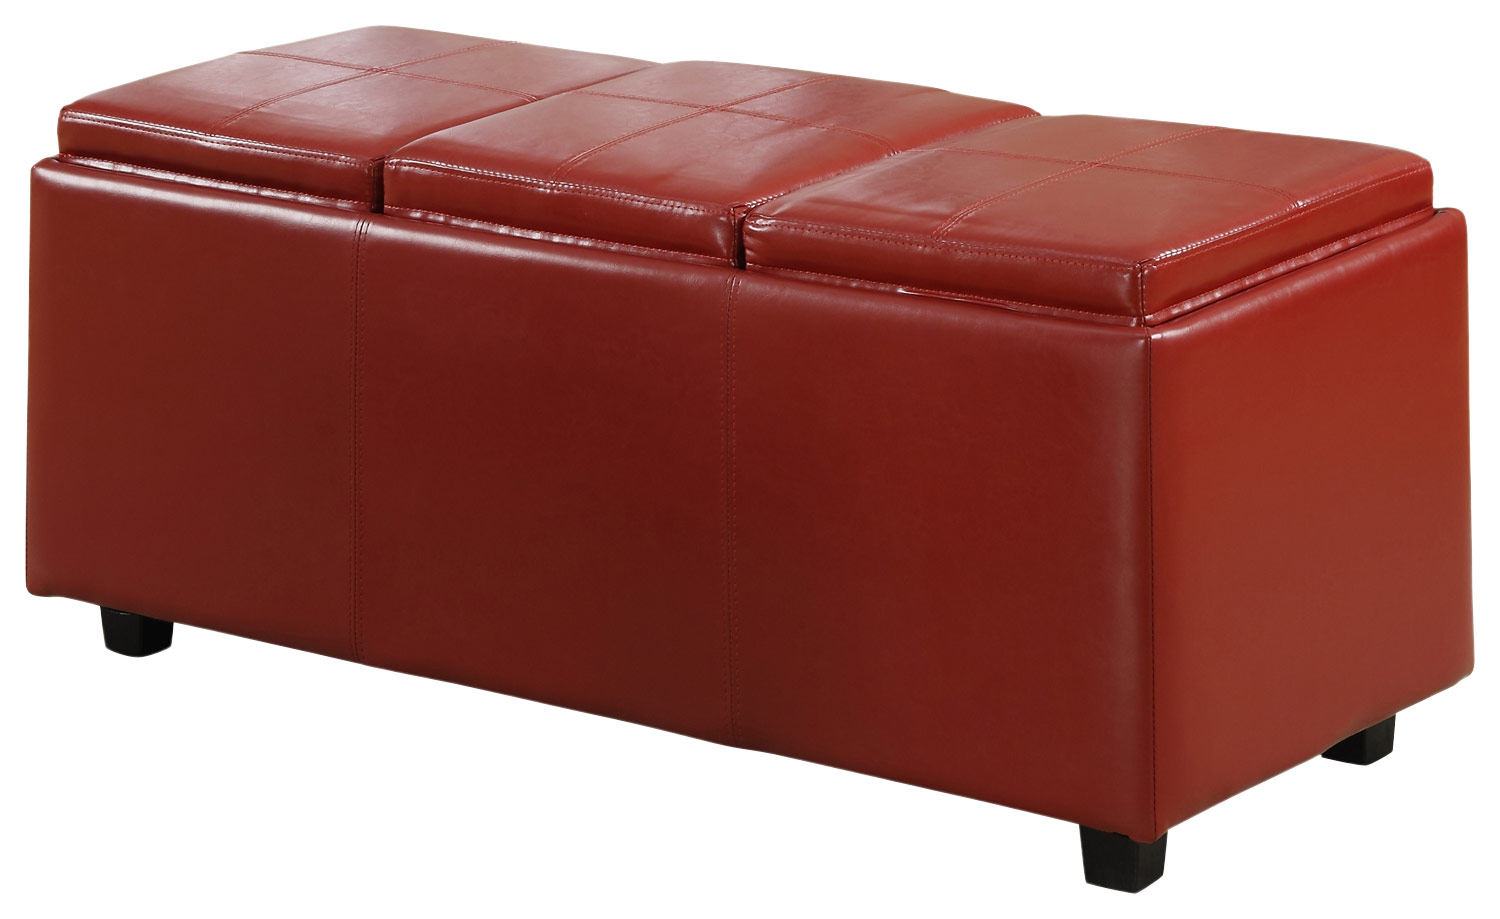 Simpli Home - Avalon Storage Ottoman - Red was $226.99 now $159.99 (30.0% off)